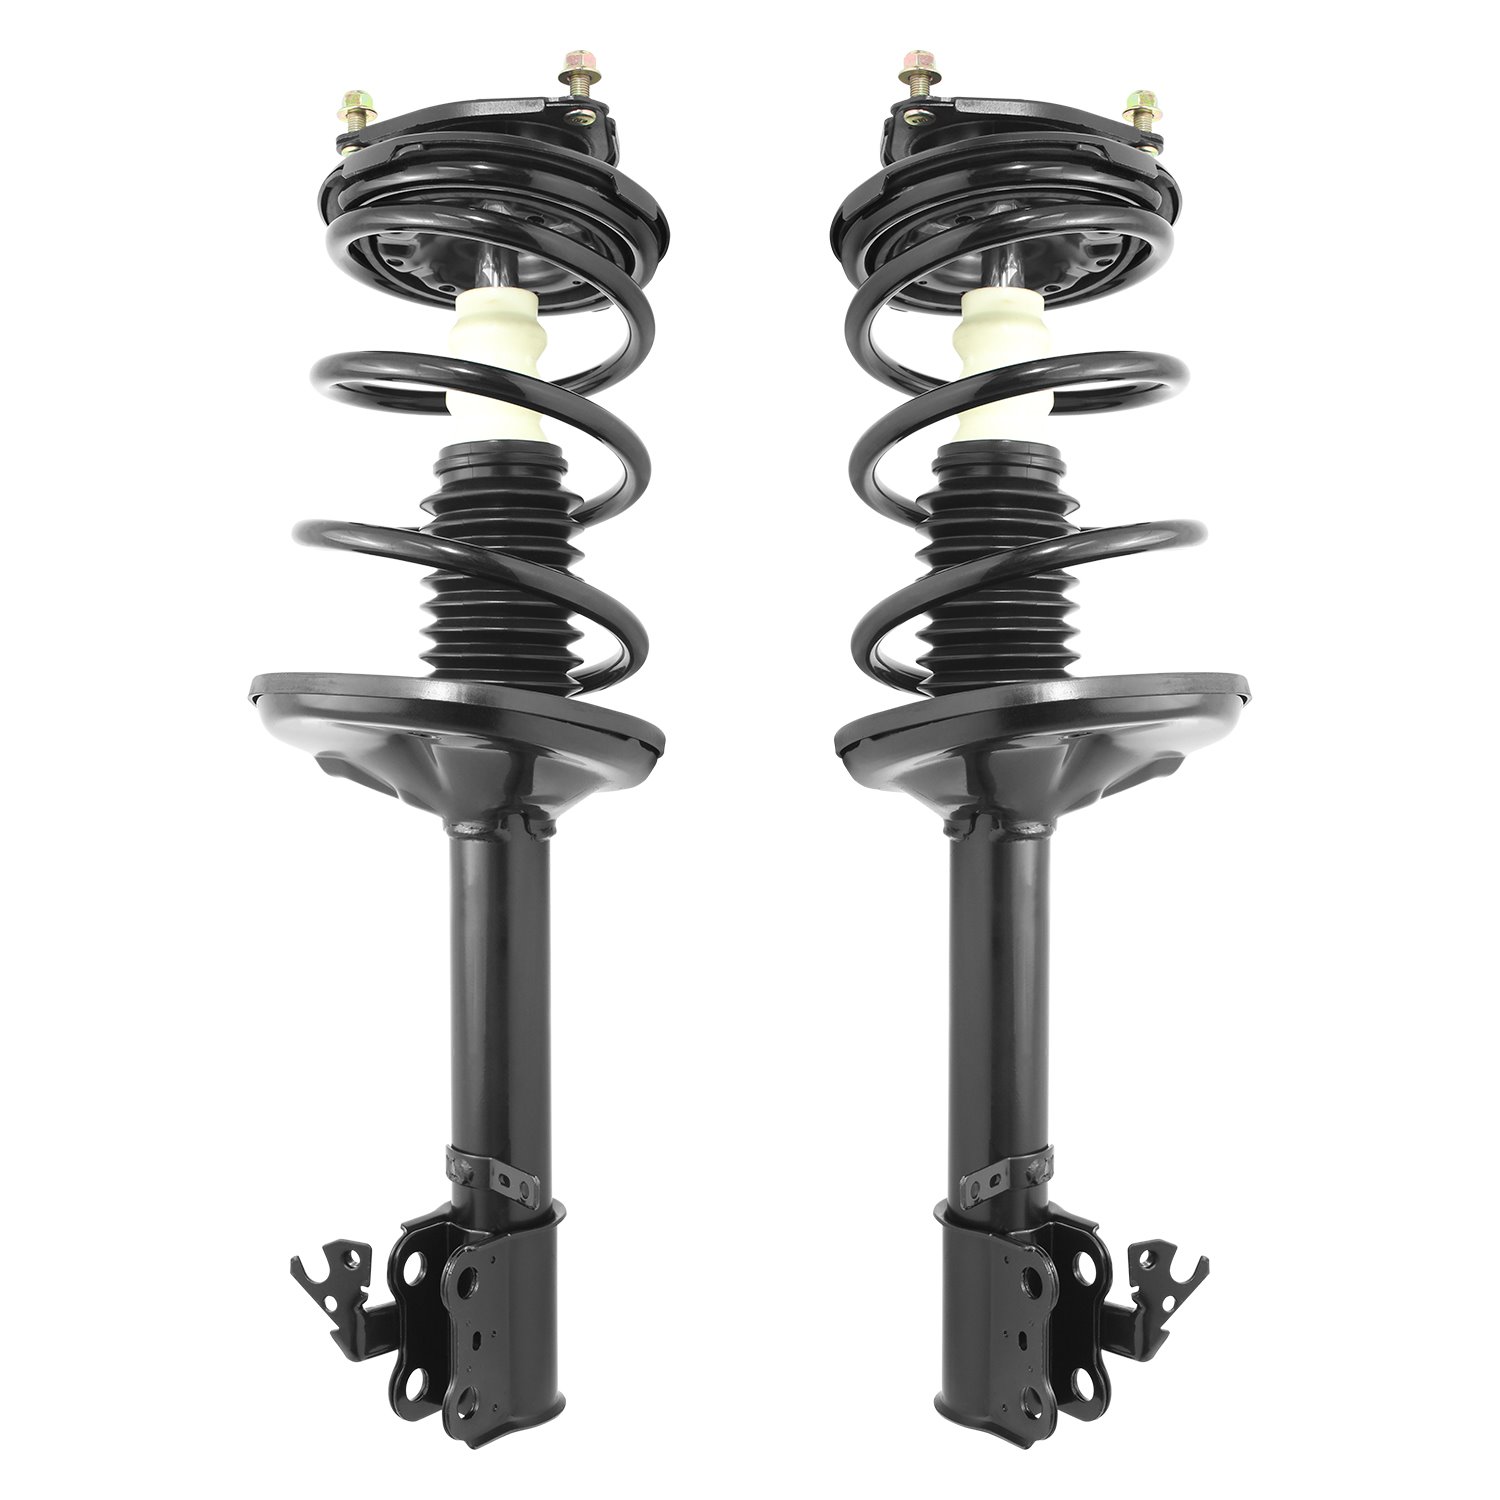 2-11247-11248-001 Suspension Strut & Coil Spring Assembly Set Fits Select Toyota RAV4